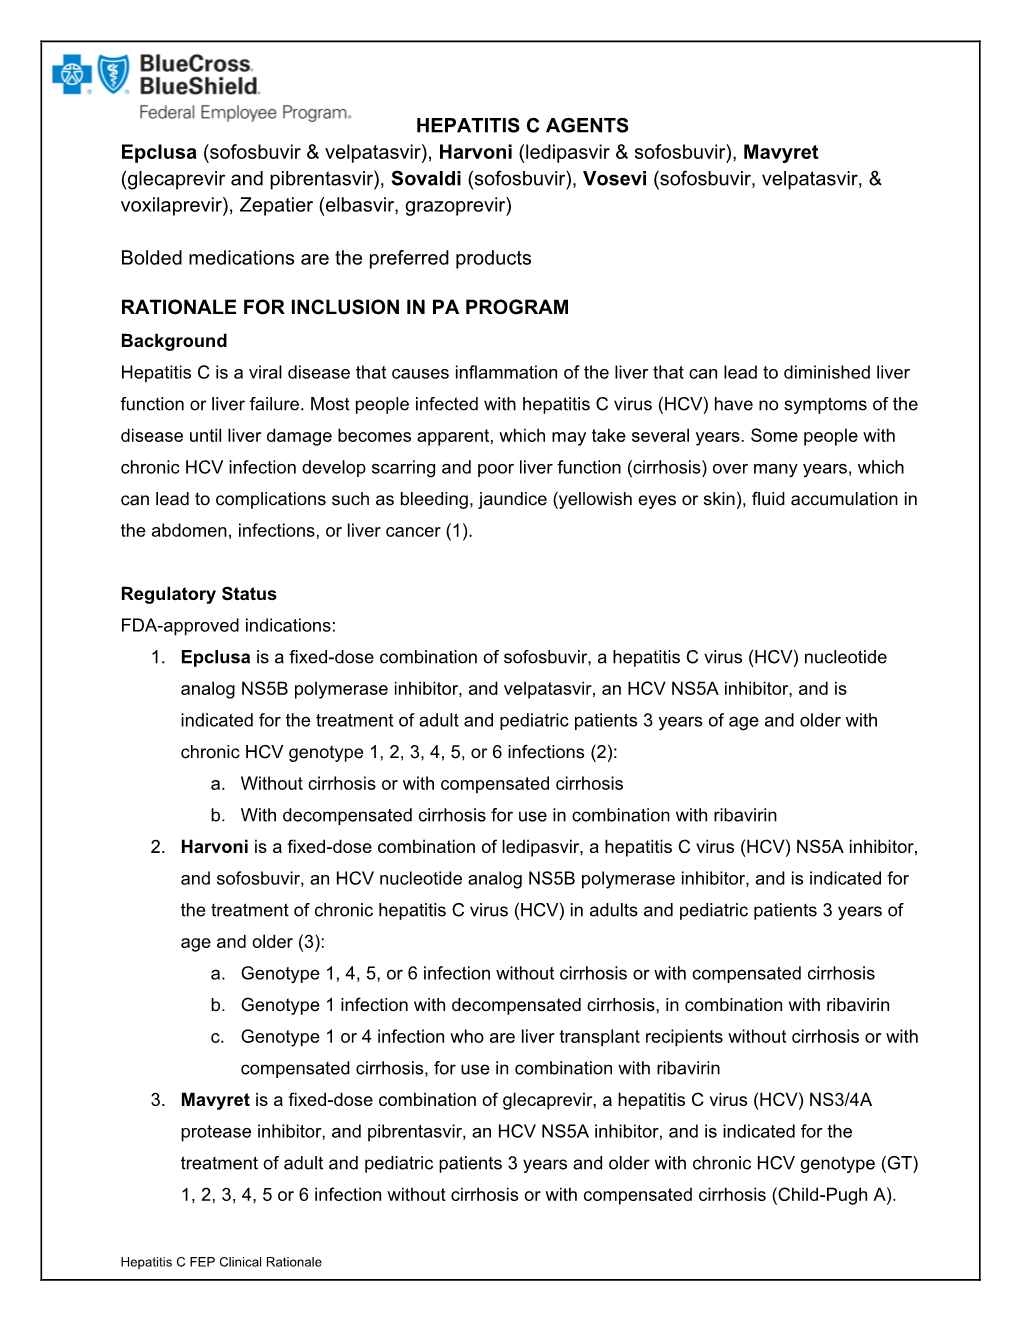 HEPATITIS C AGENTS Epclusa (Sofosbuvir & Velpatasvir), Harvoni